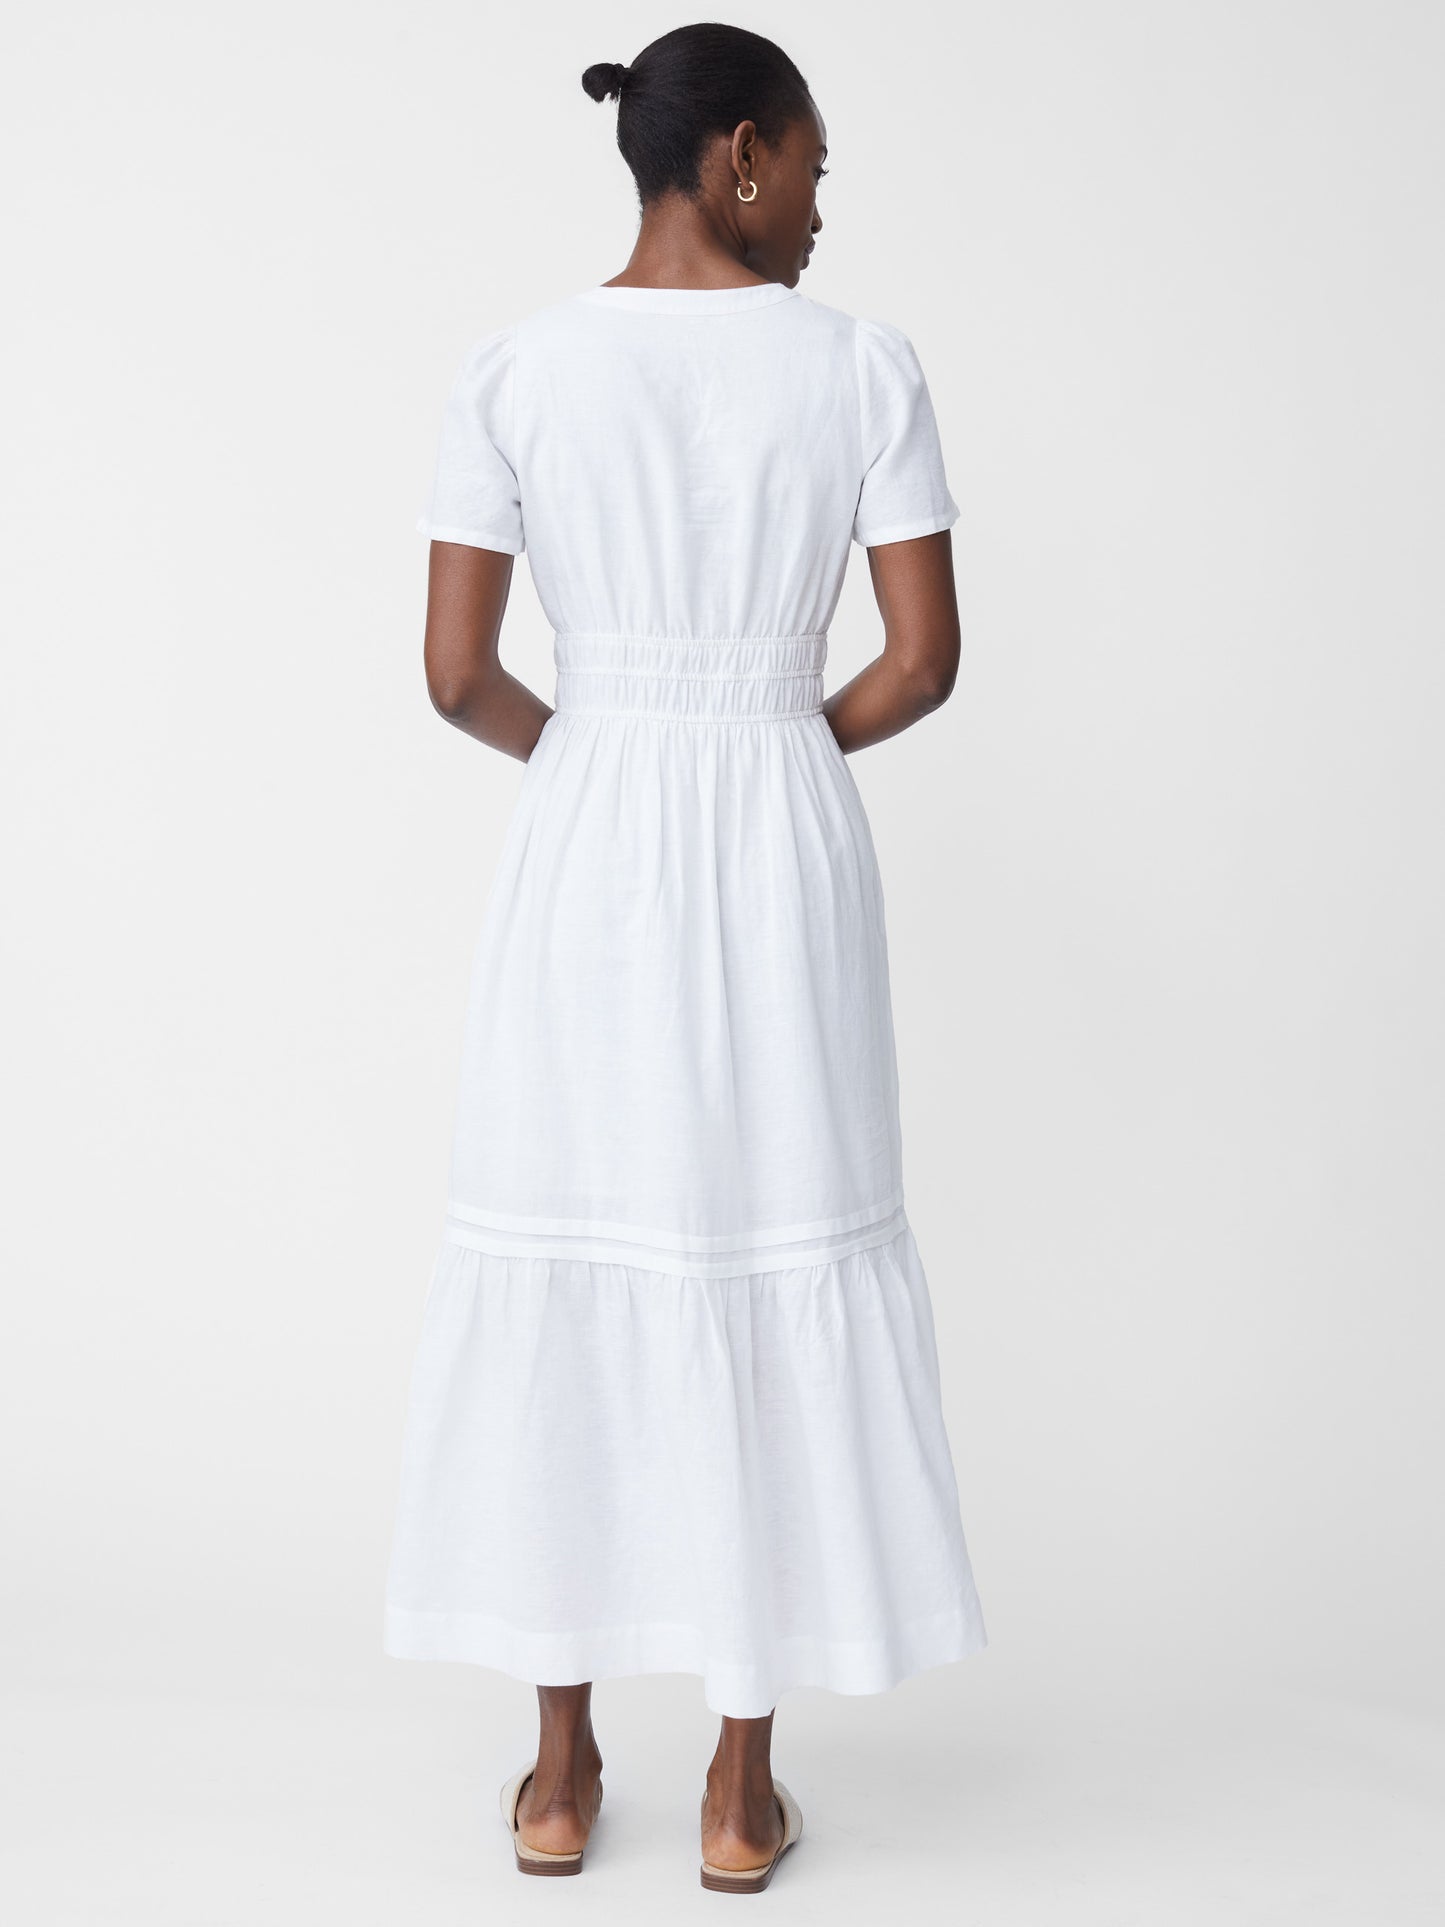 Model wearing J.McLaughlin Mei dress in white made with linen.